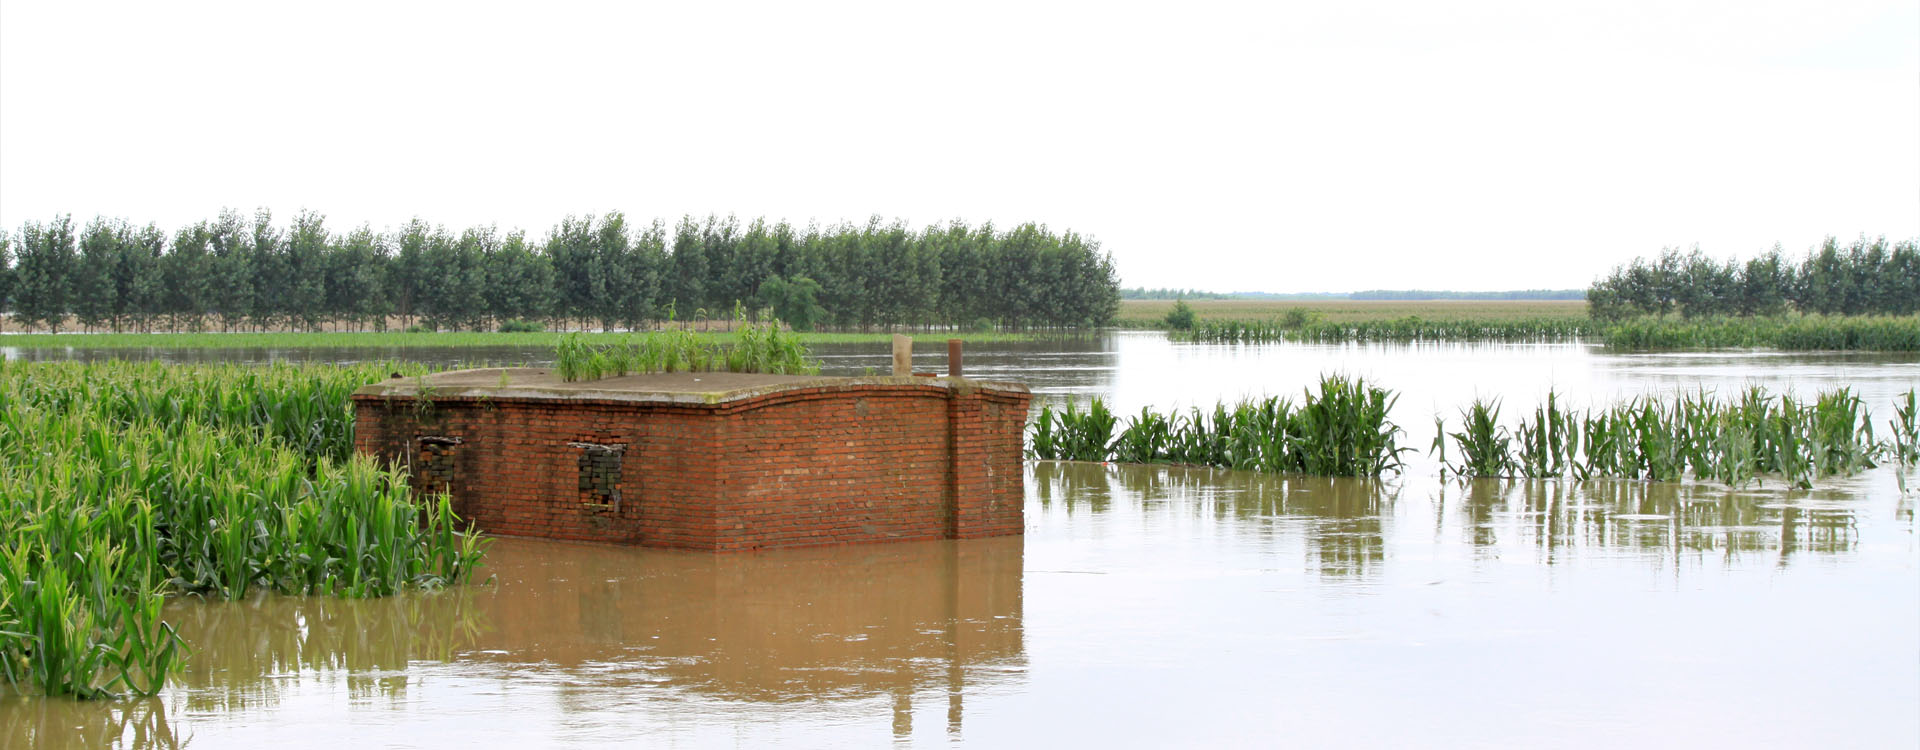 bnr-cq-map-out-flood-risk